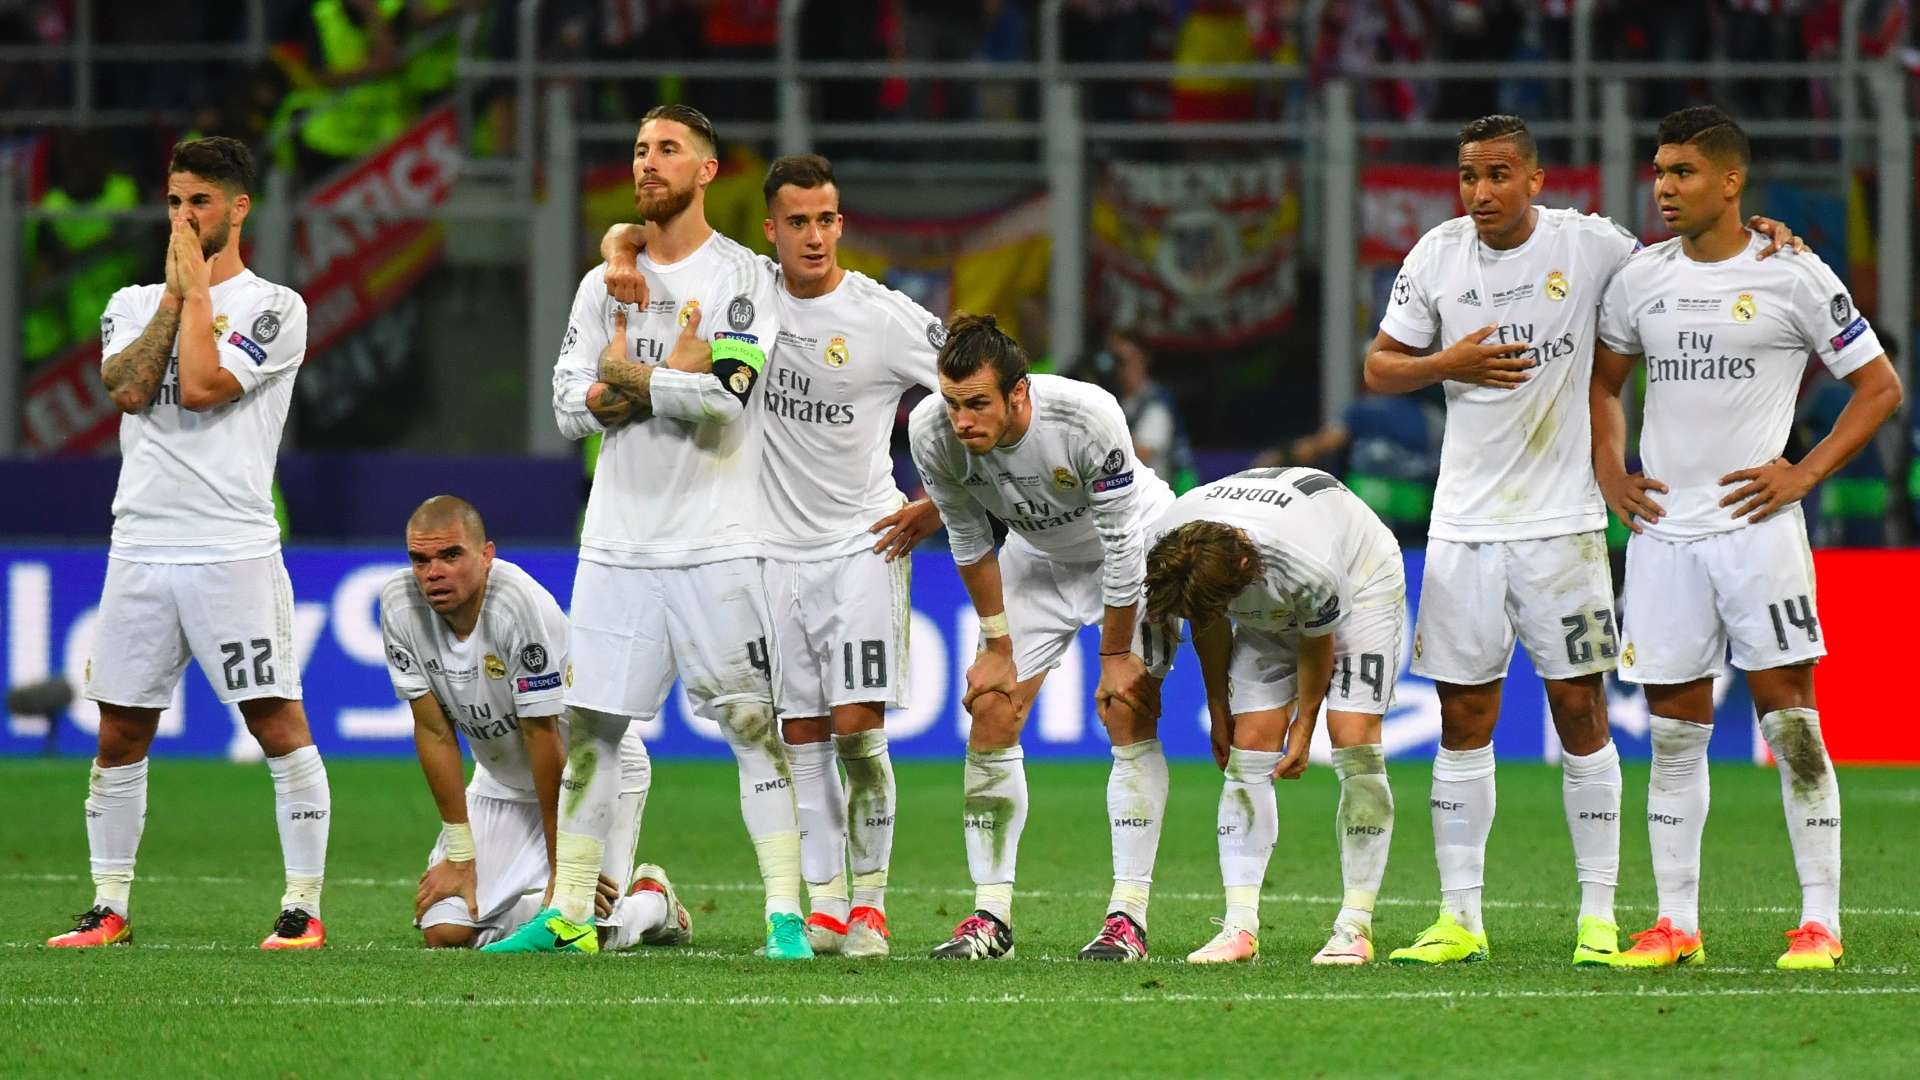 Real Madrid tanda de penaltis